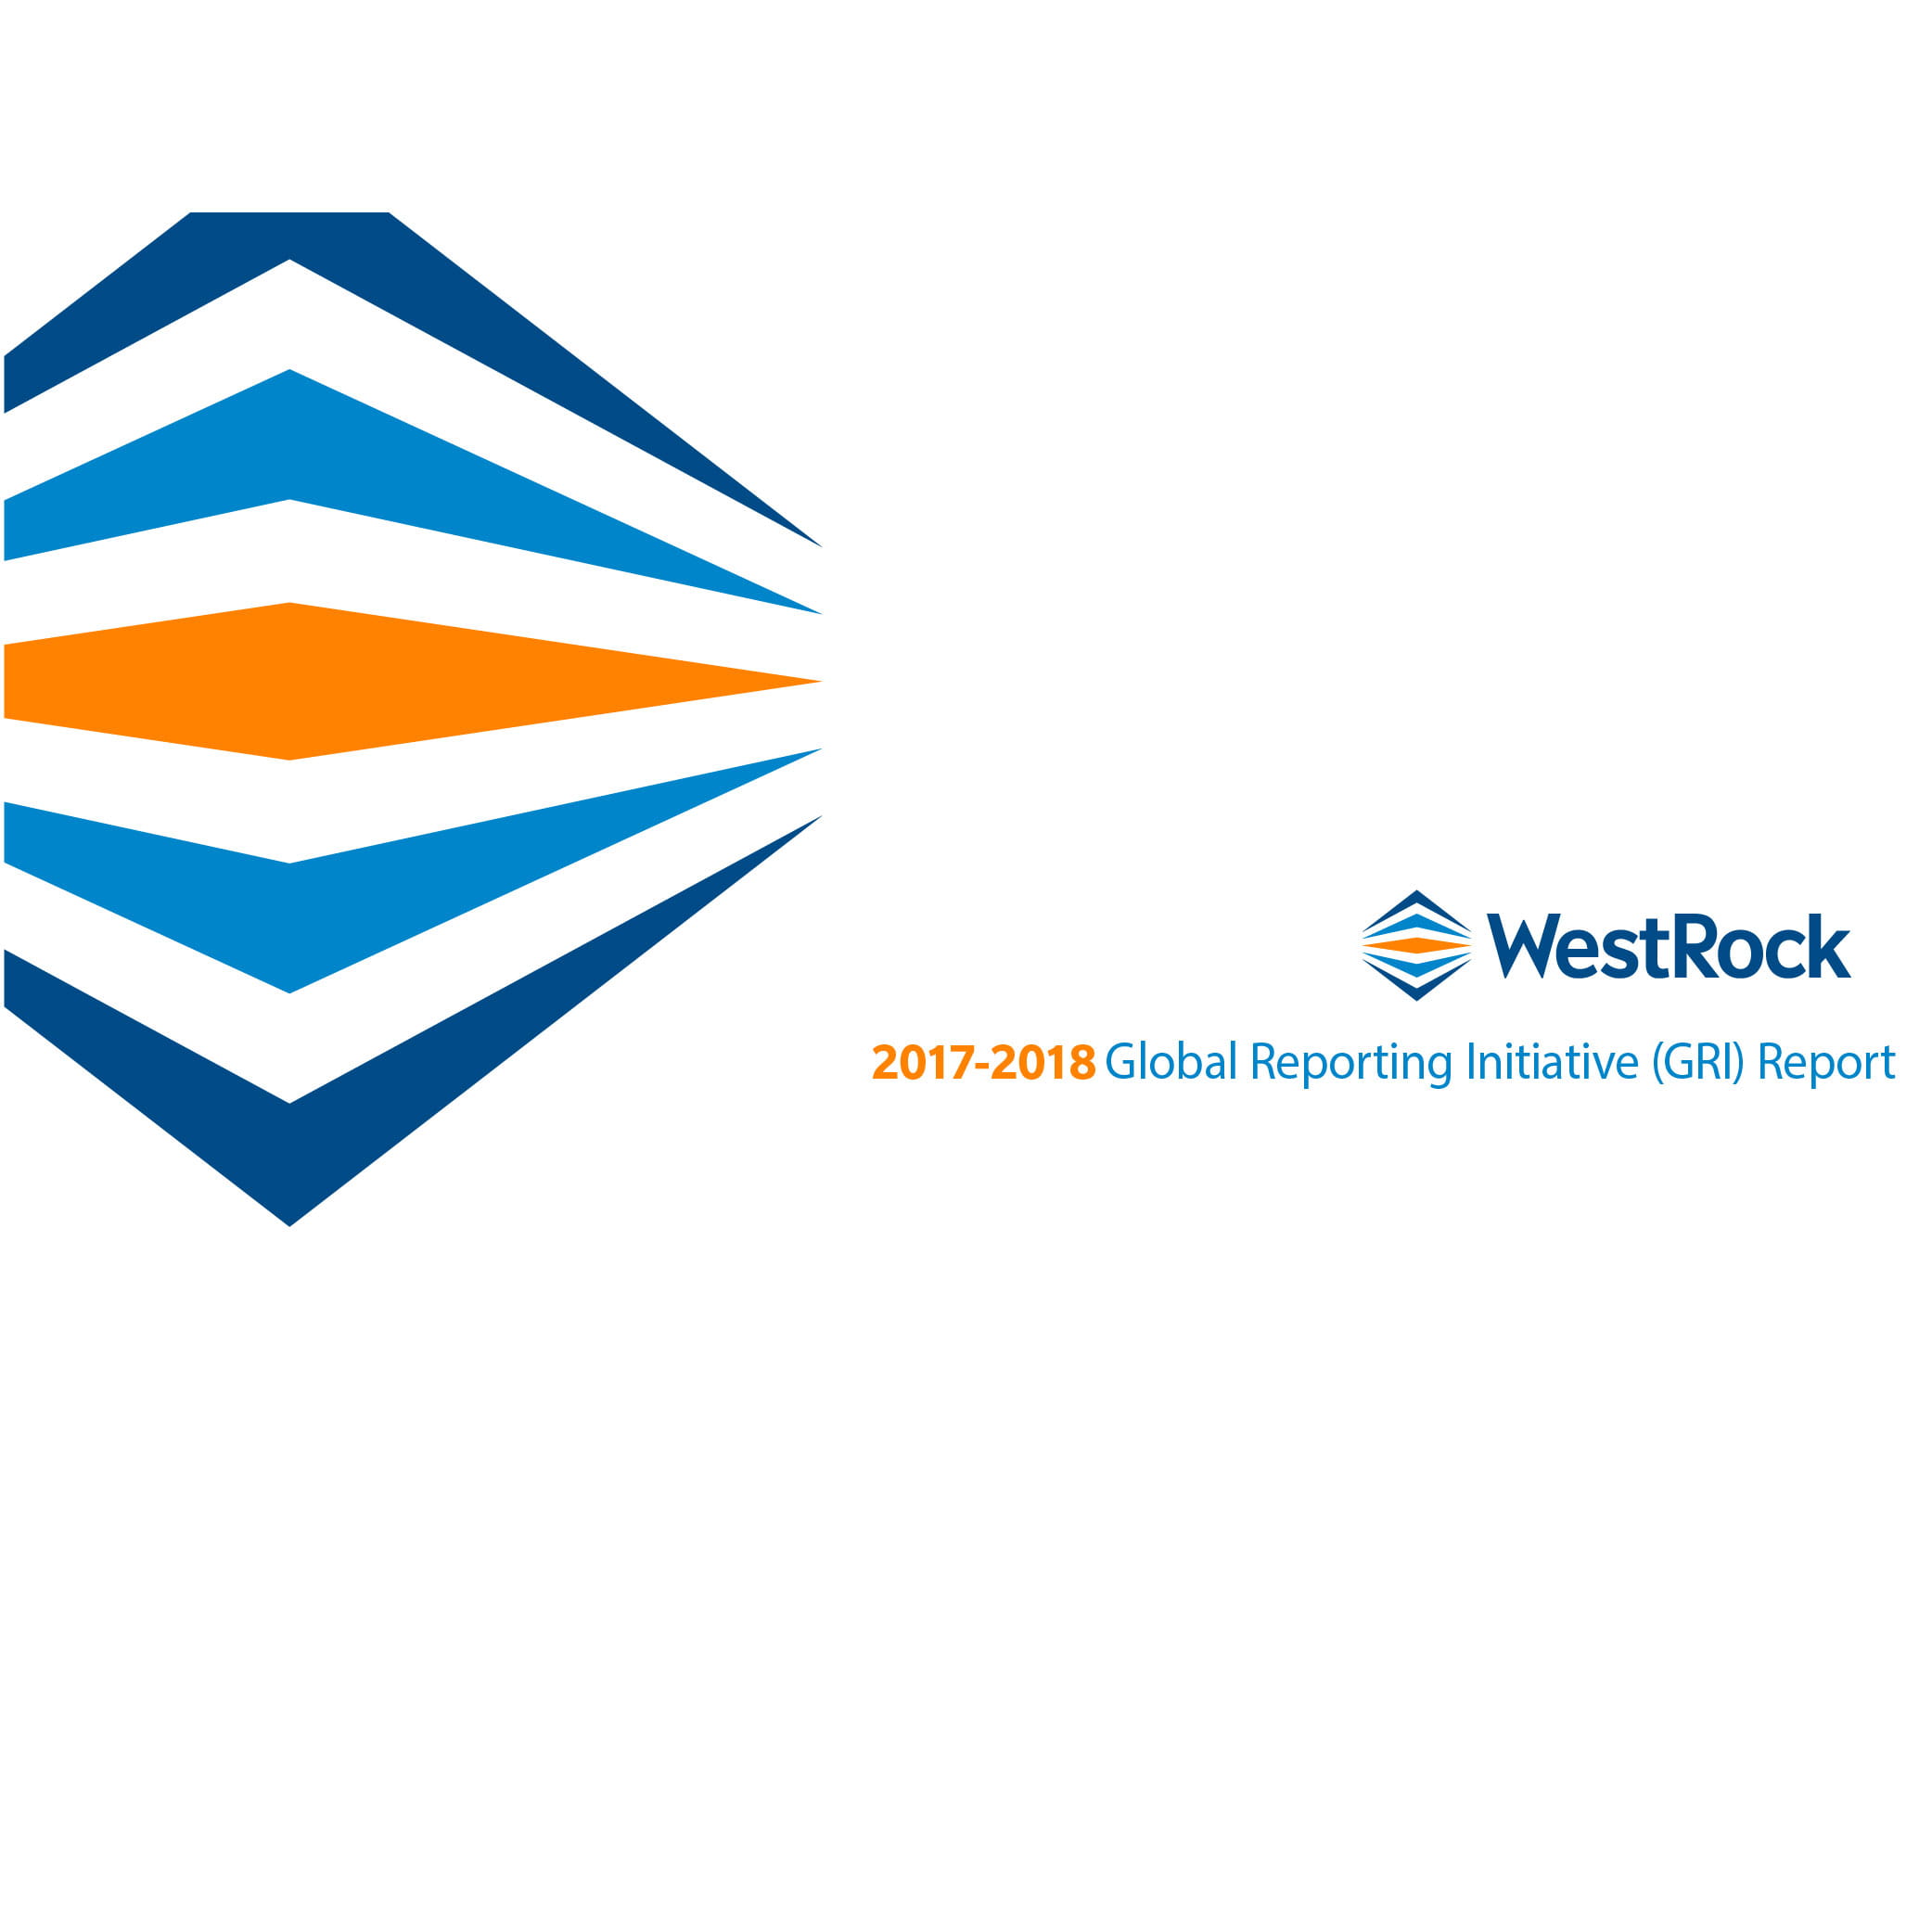 WestRock 2017 到 2018 年 GRI 报告